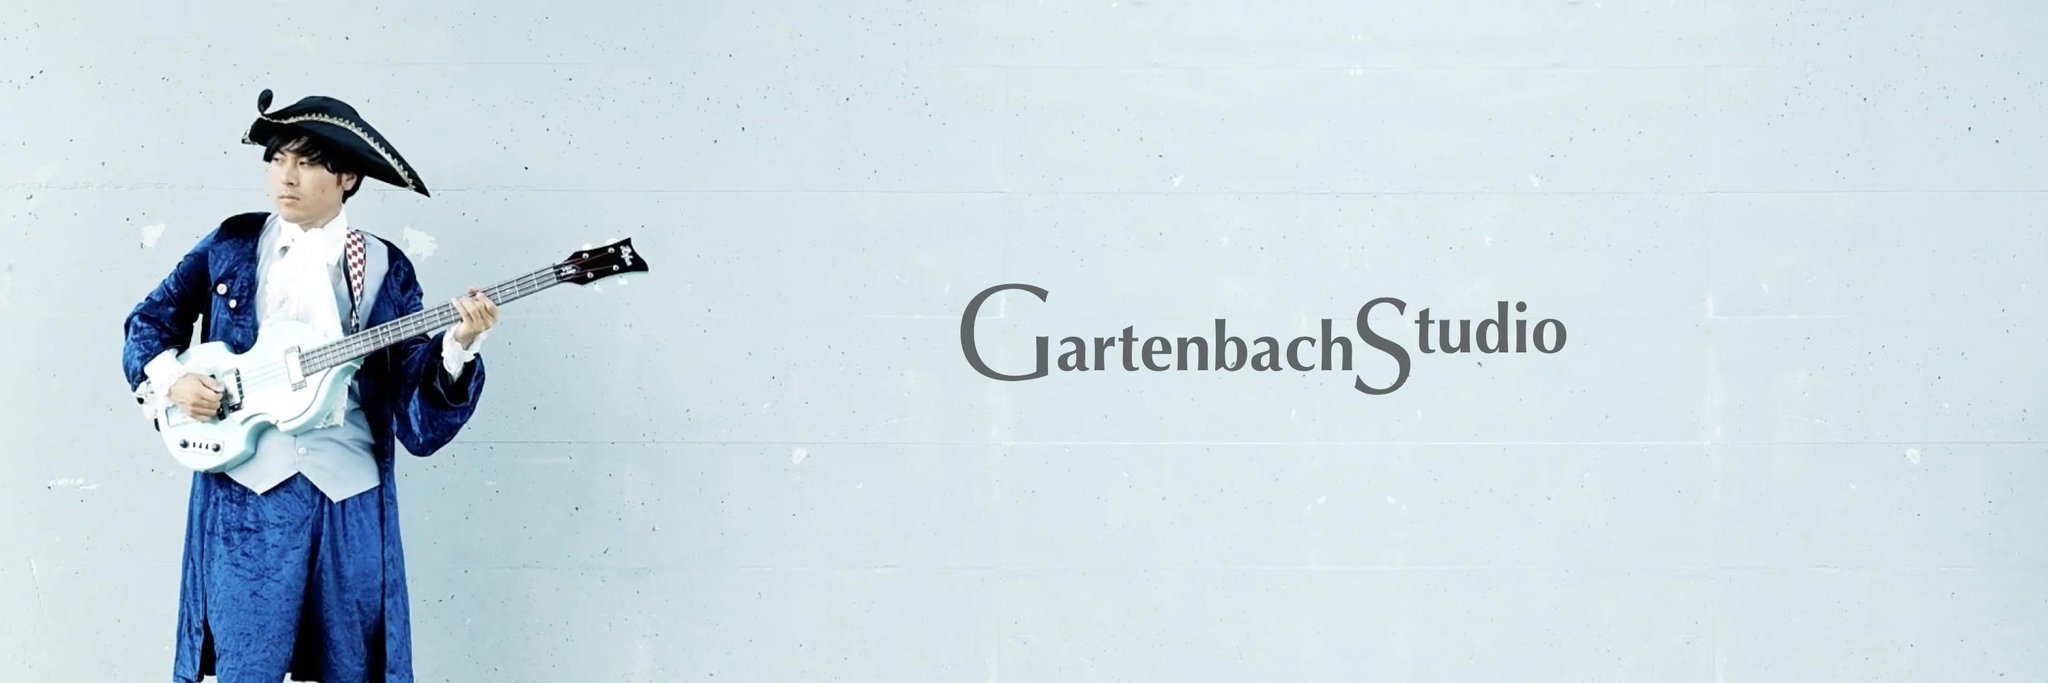 Gartenbach Studio